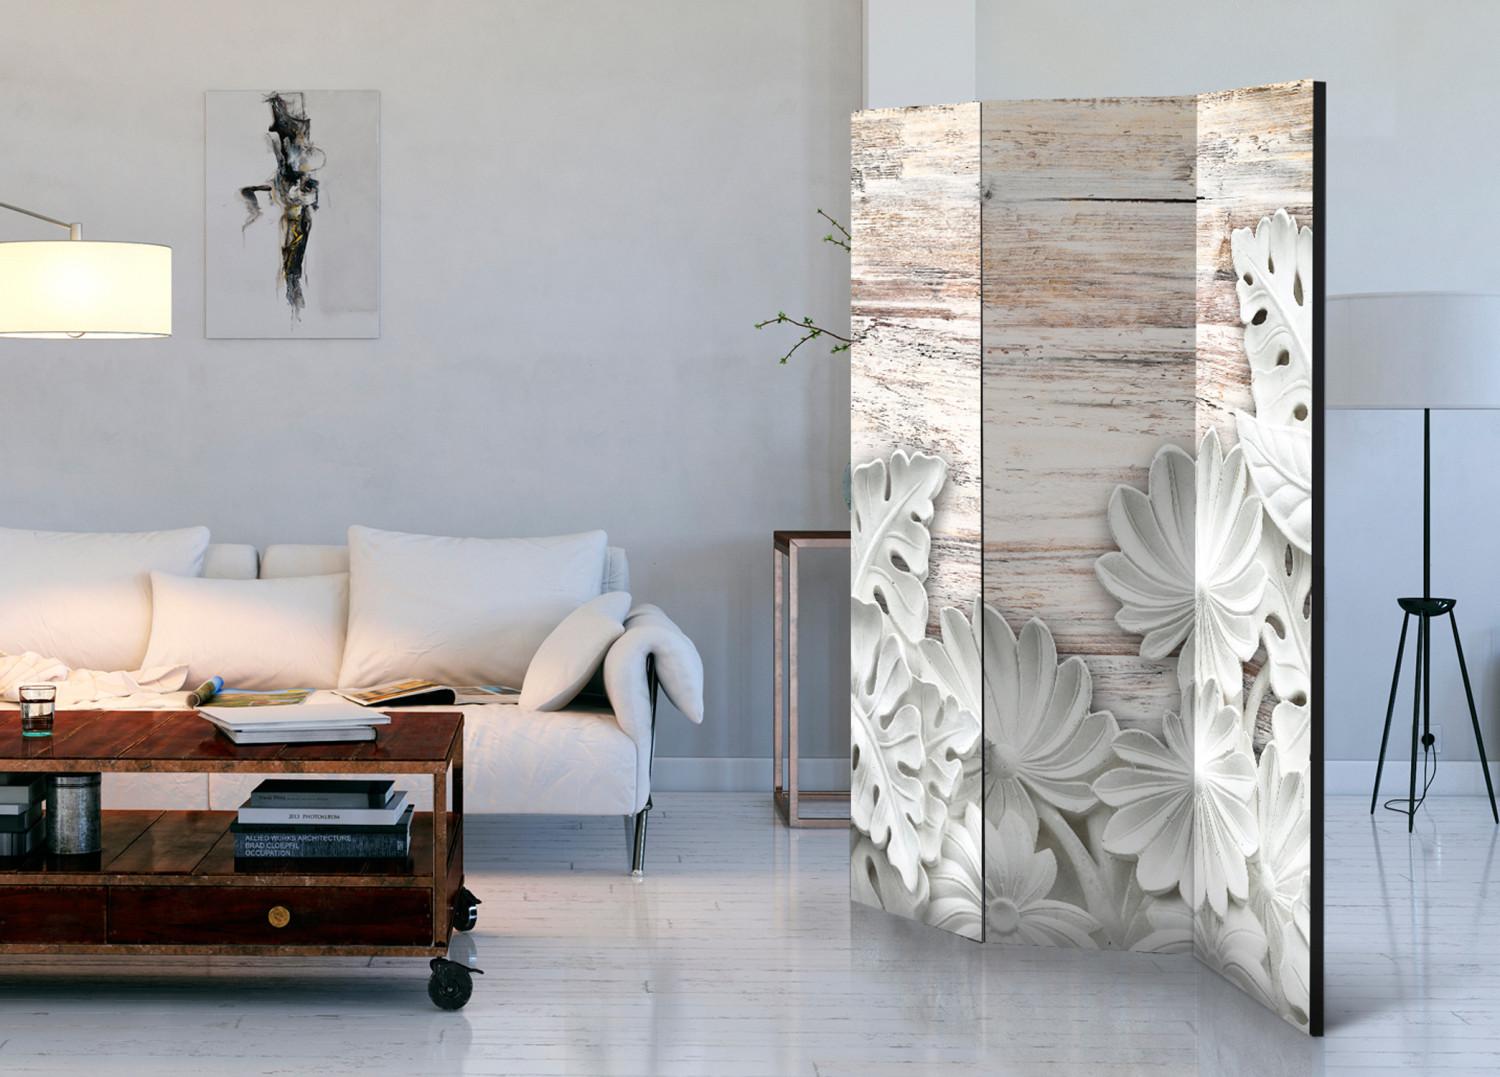 Room Divider Alabaster Grove - stone floral motif on a wooden textured background